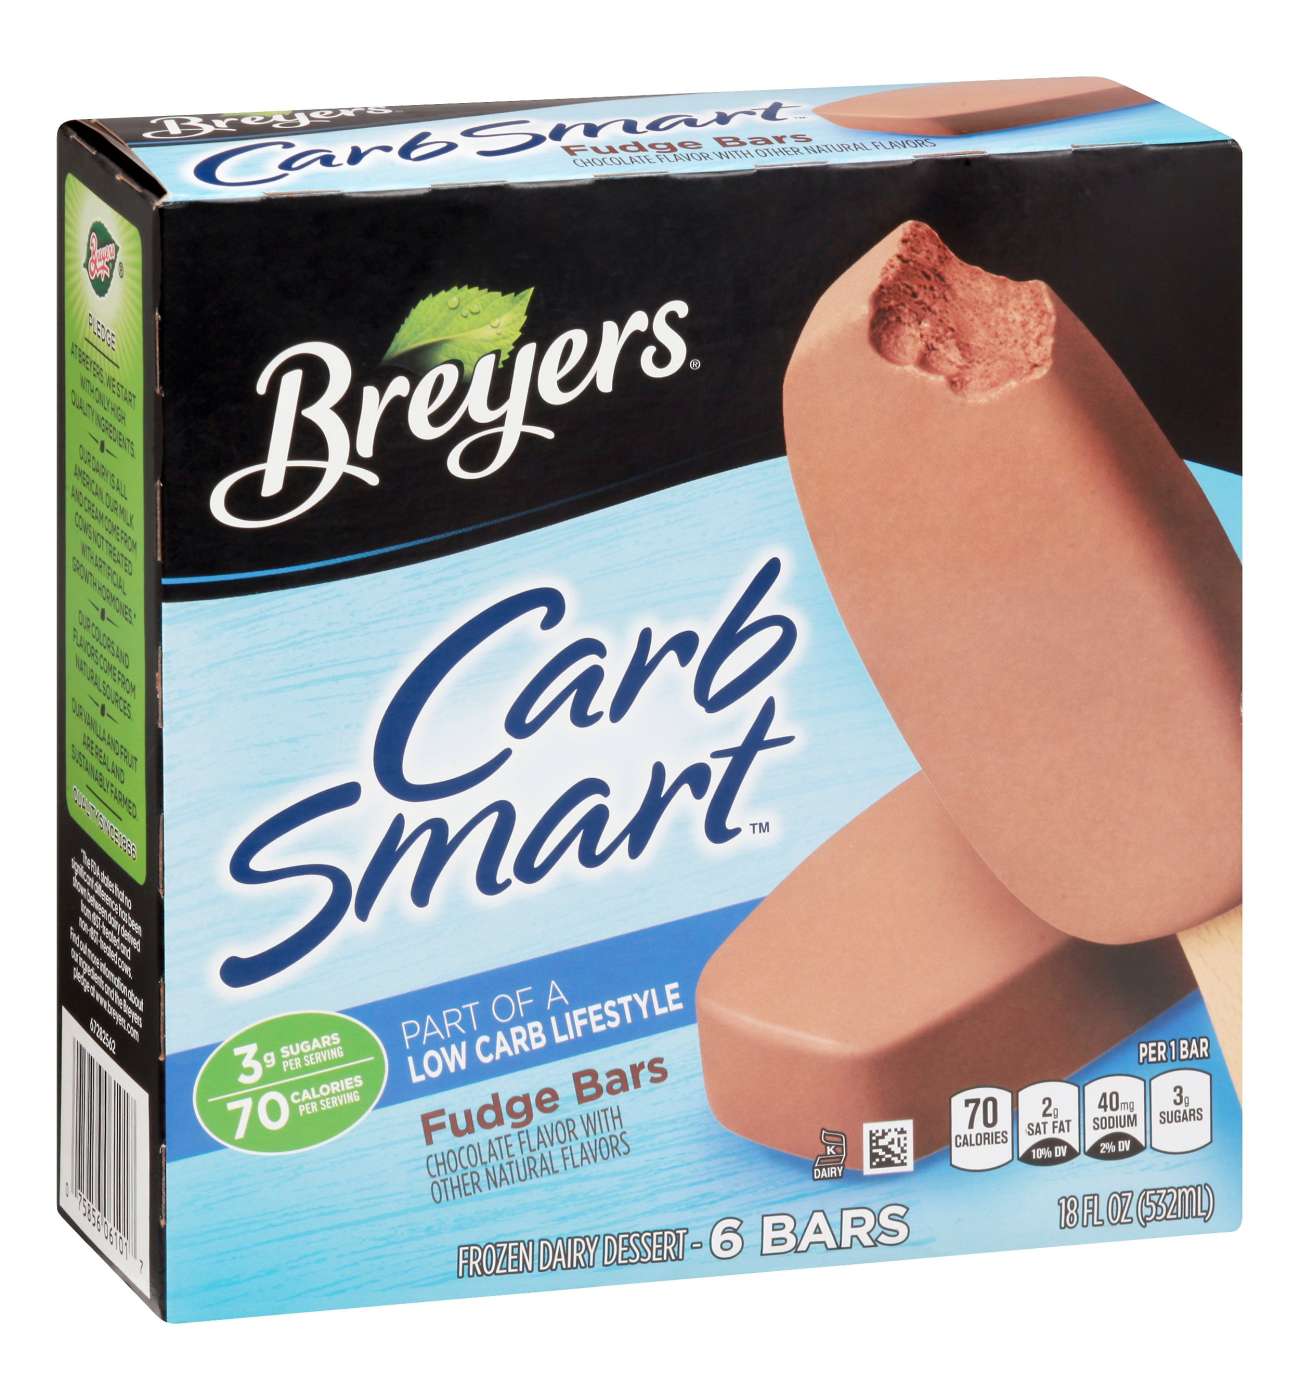 Breyers Carb Smart Fudge Bars; image 1 of 2